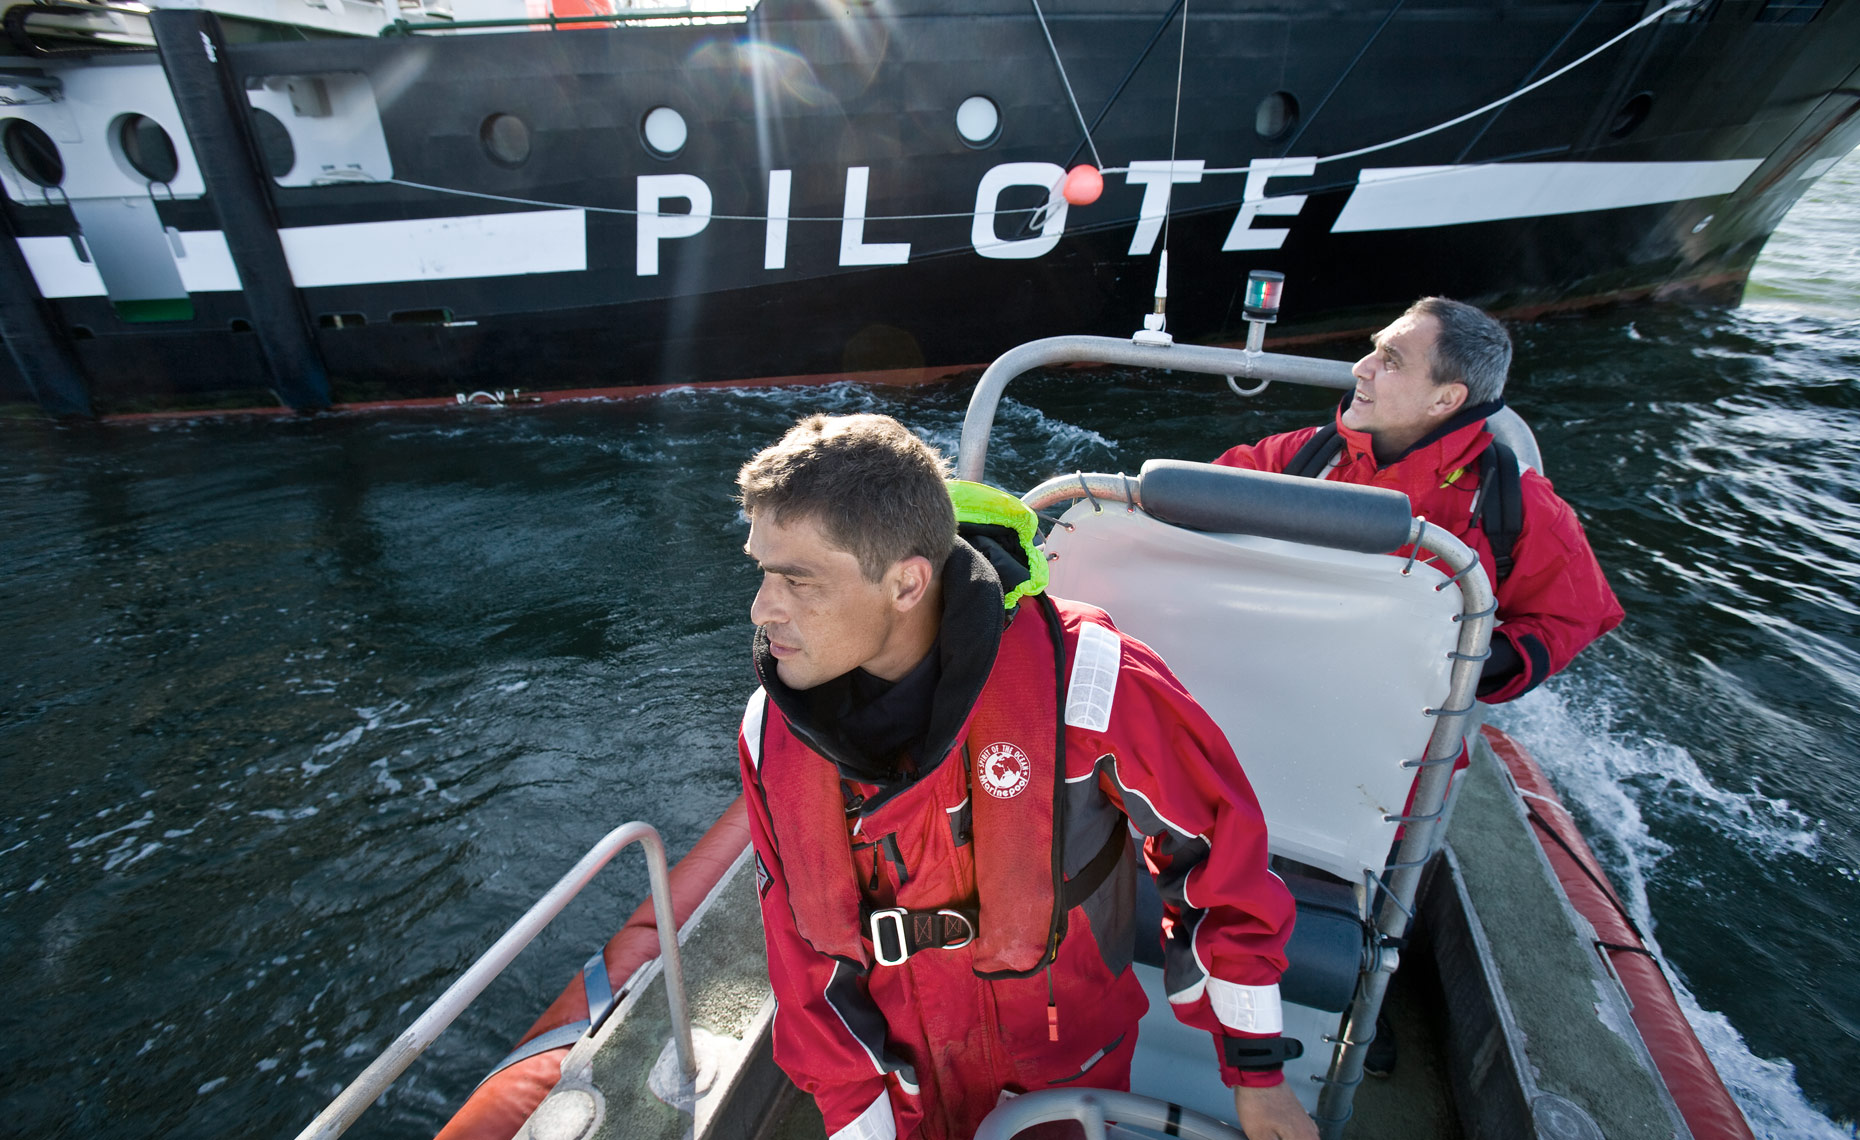 Pilote_-Boat